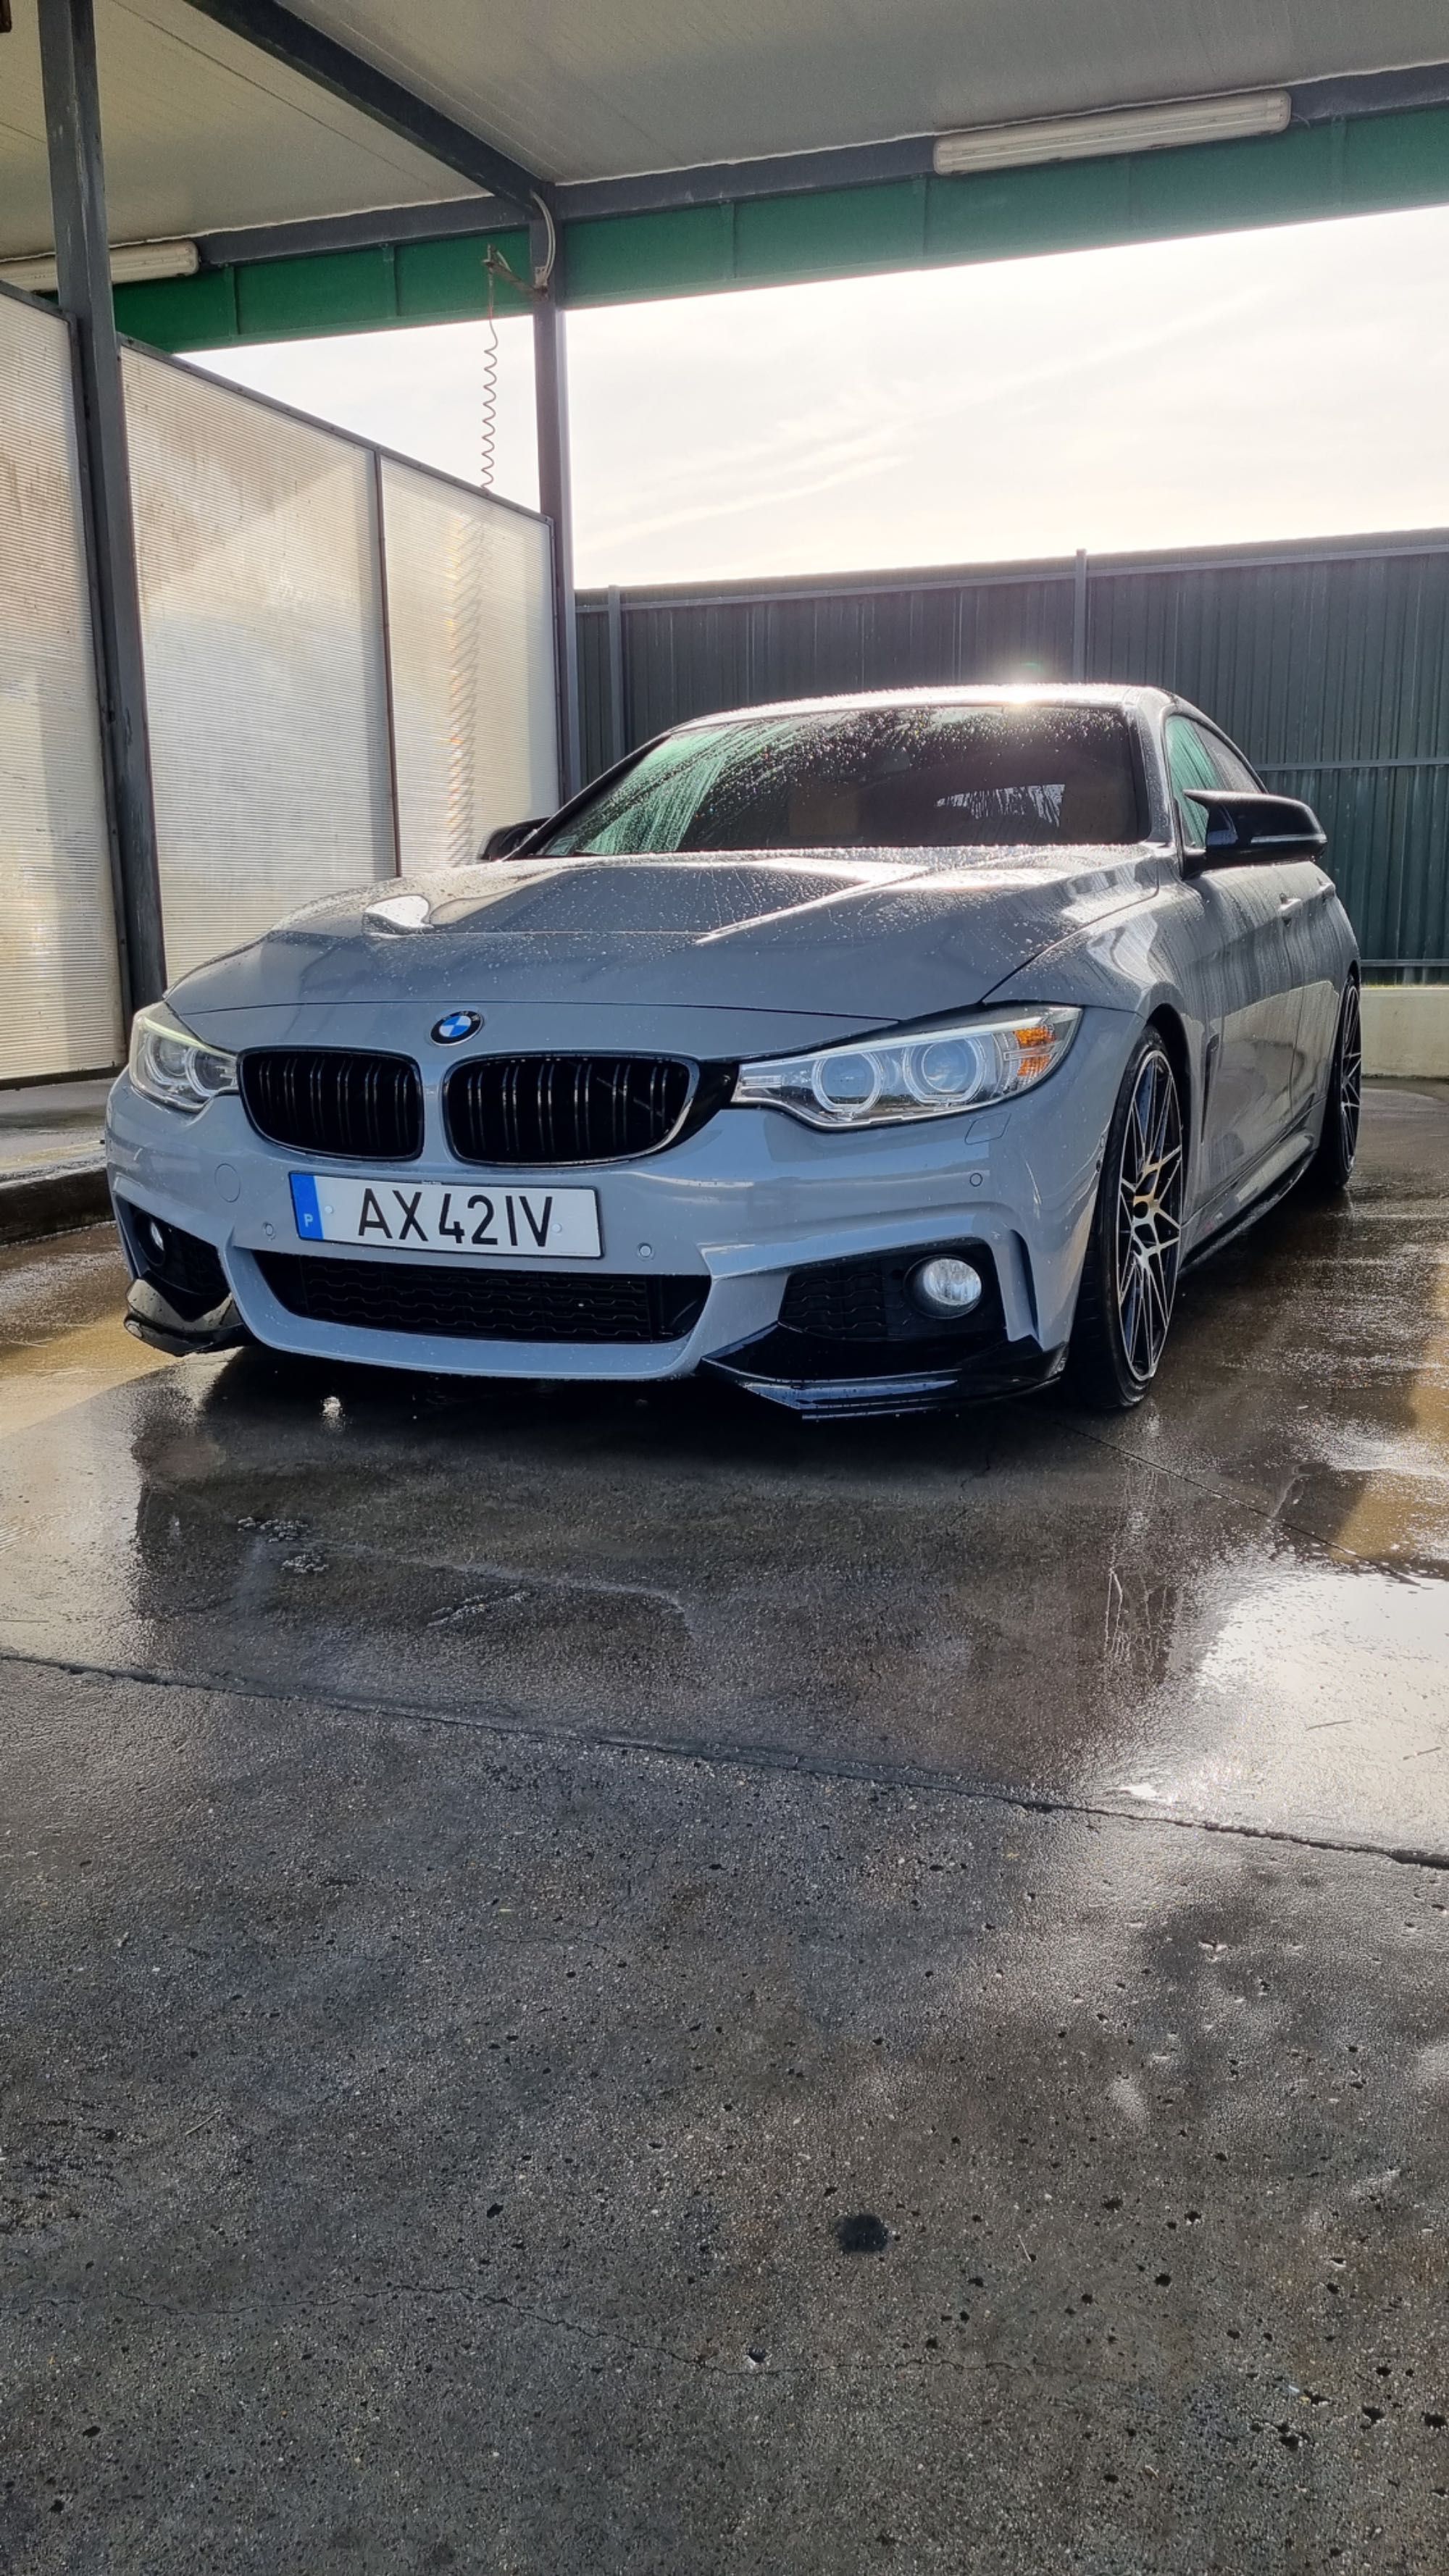 BMW 420 Grand Coupe XDrive/BMWLuxury full extras kit M4 MPerfirmance